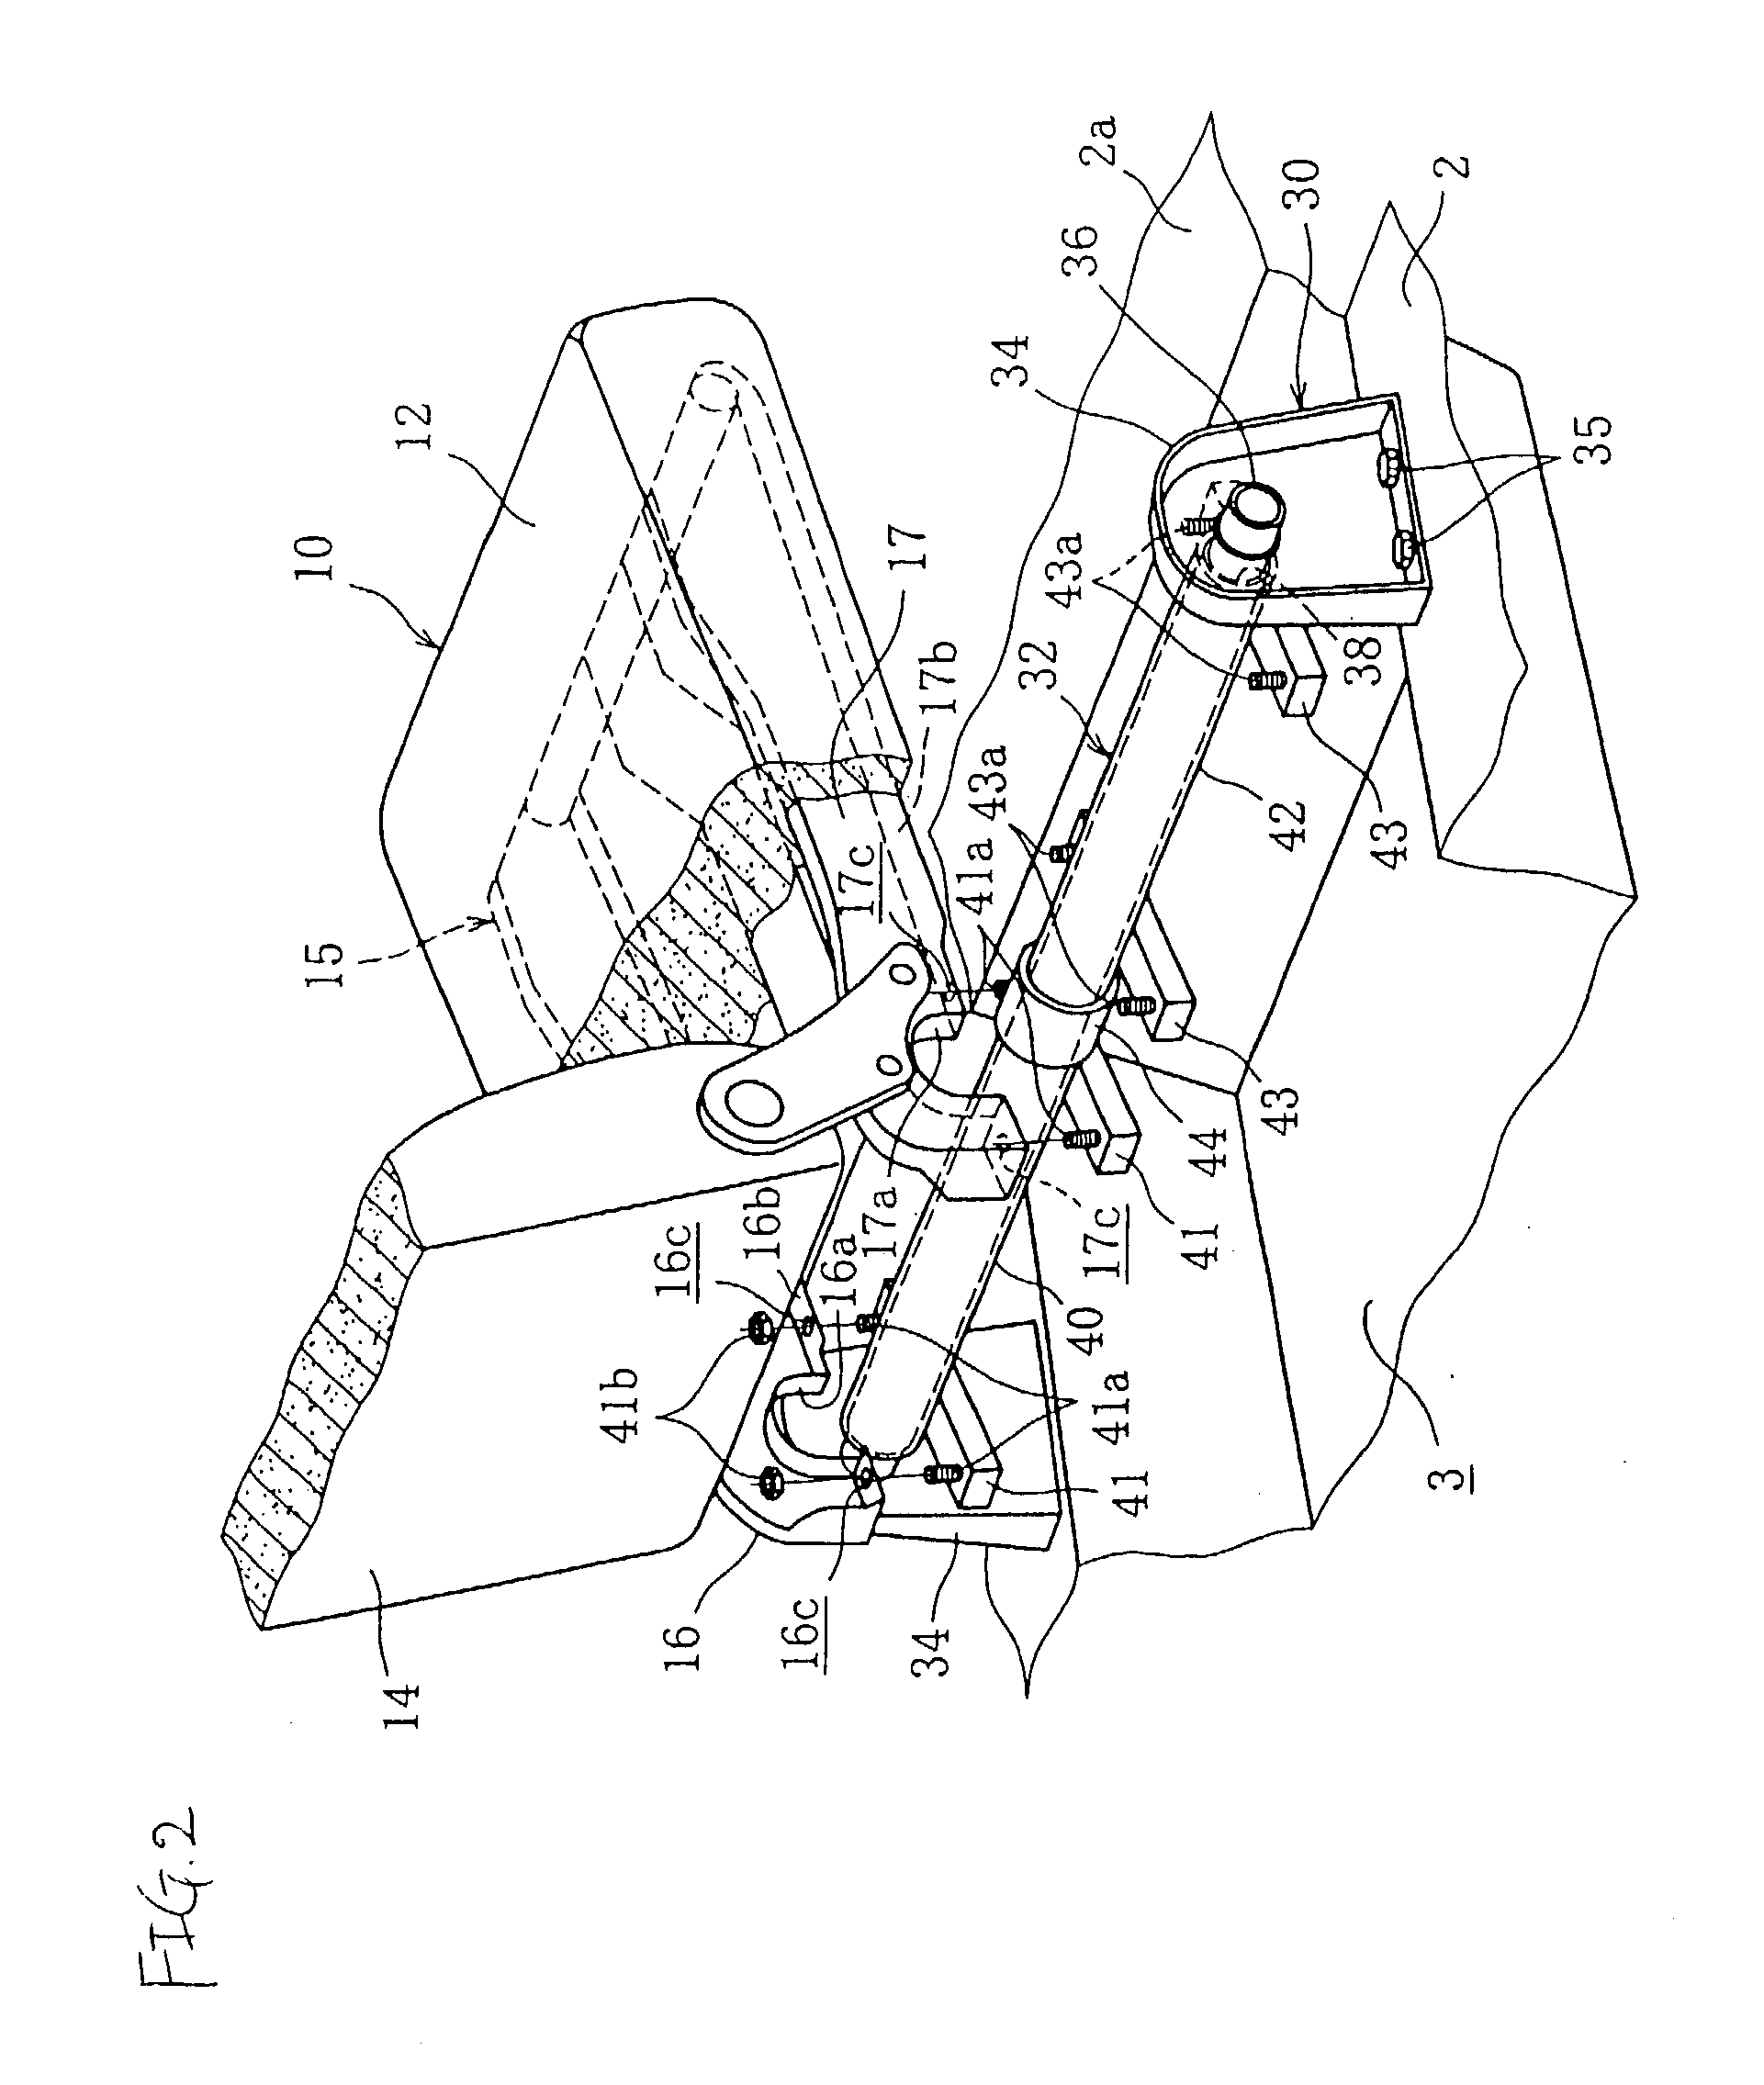 Vehicle seat apparatus